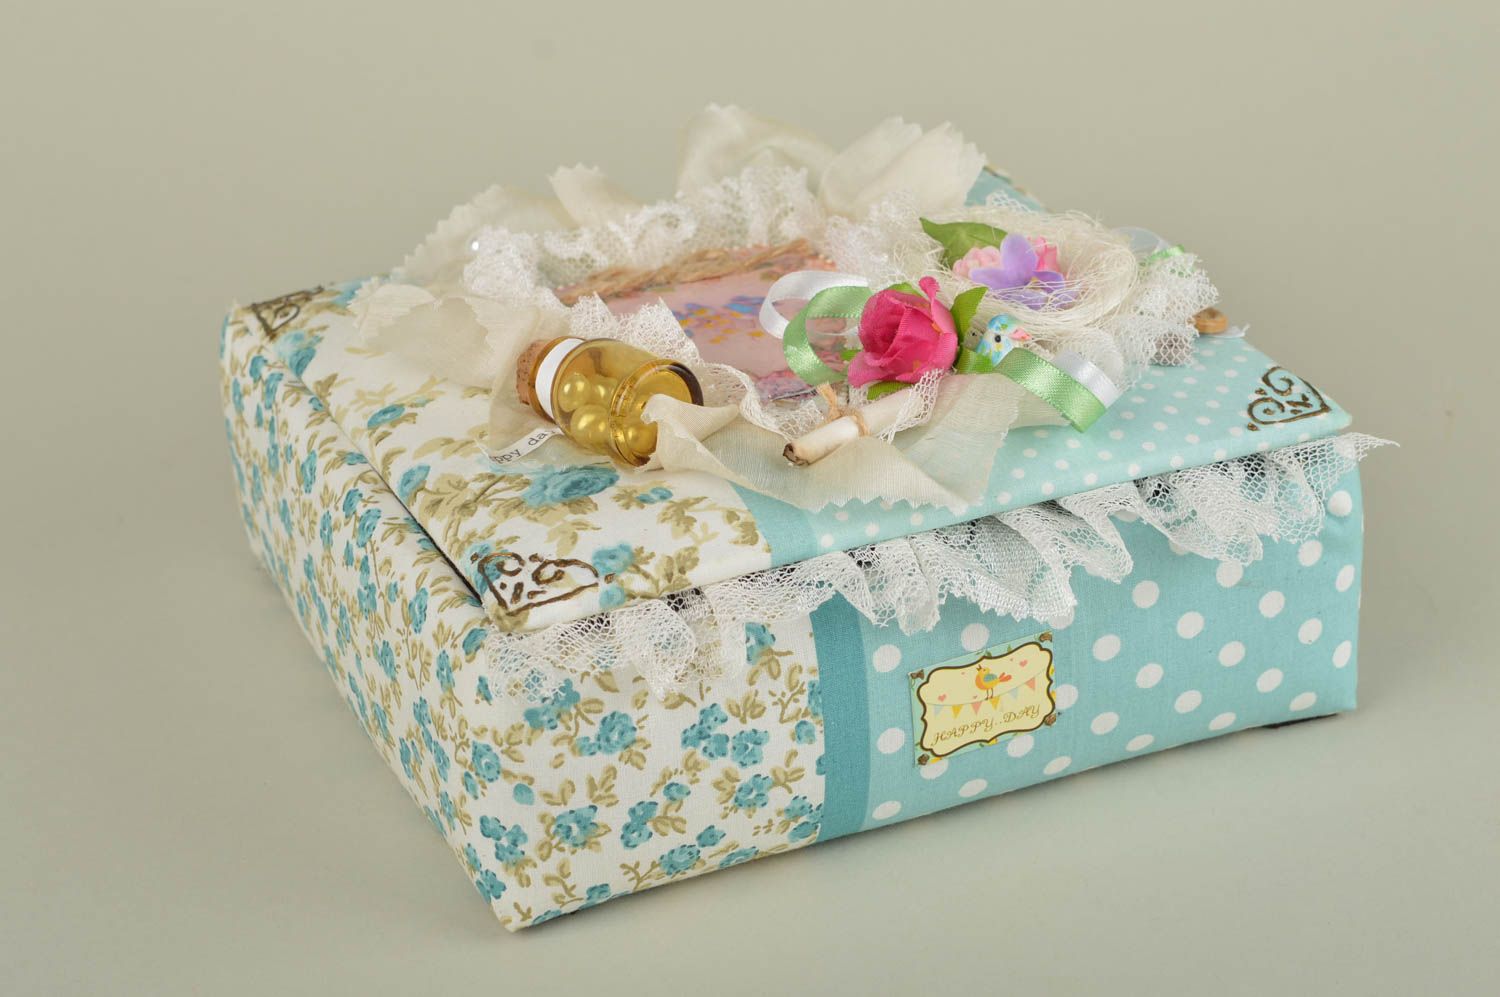 Handmade wooden box vintage jewelry box design home decoration gift ideas photo 2